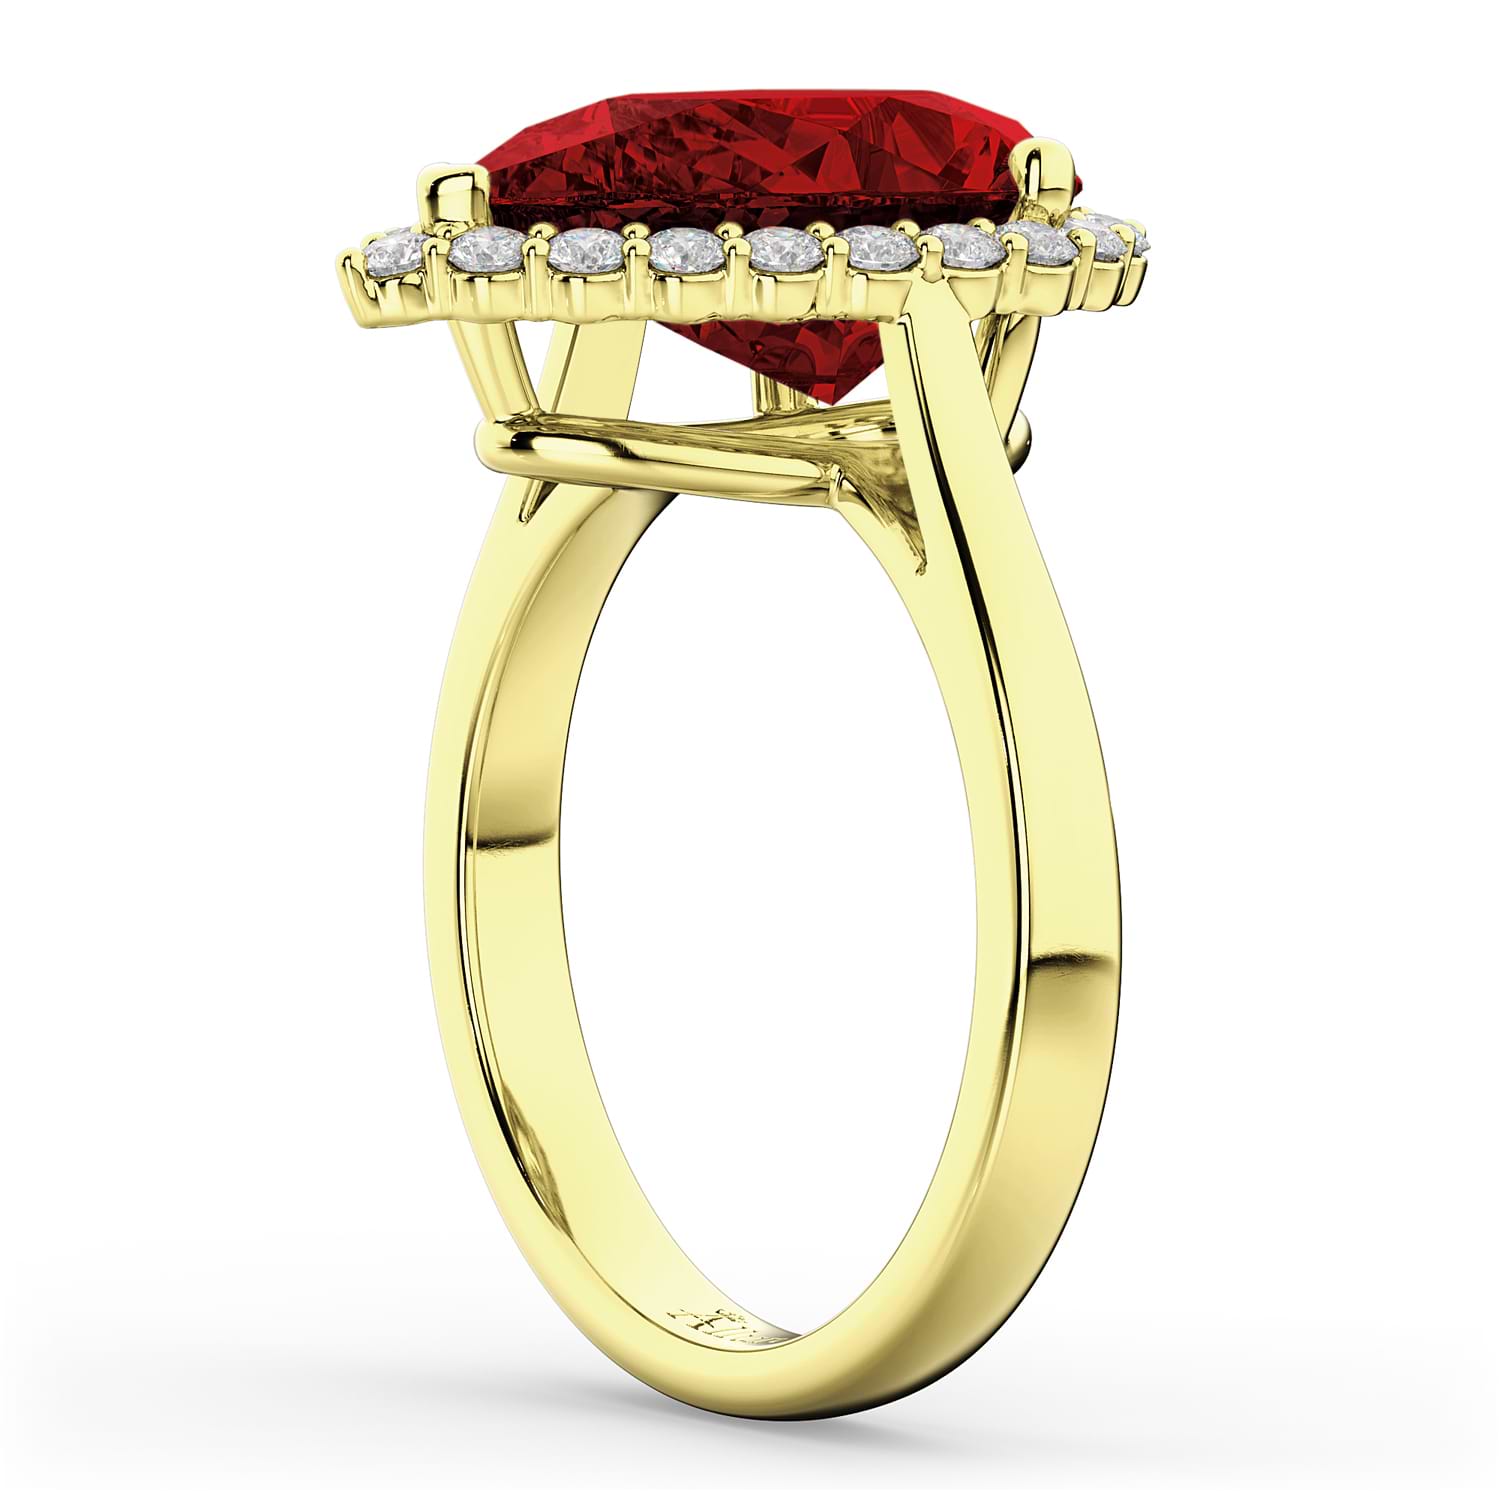 Pear Cut Halo Garnet & Diamond Engagement Ring 14K Yellow Gold 6.24ct